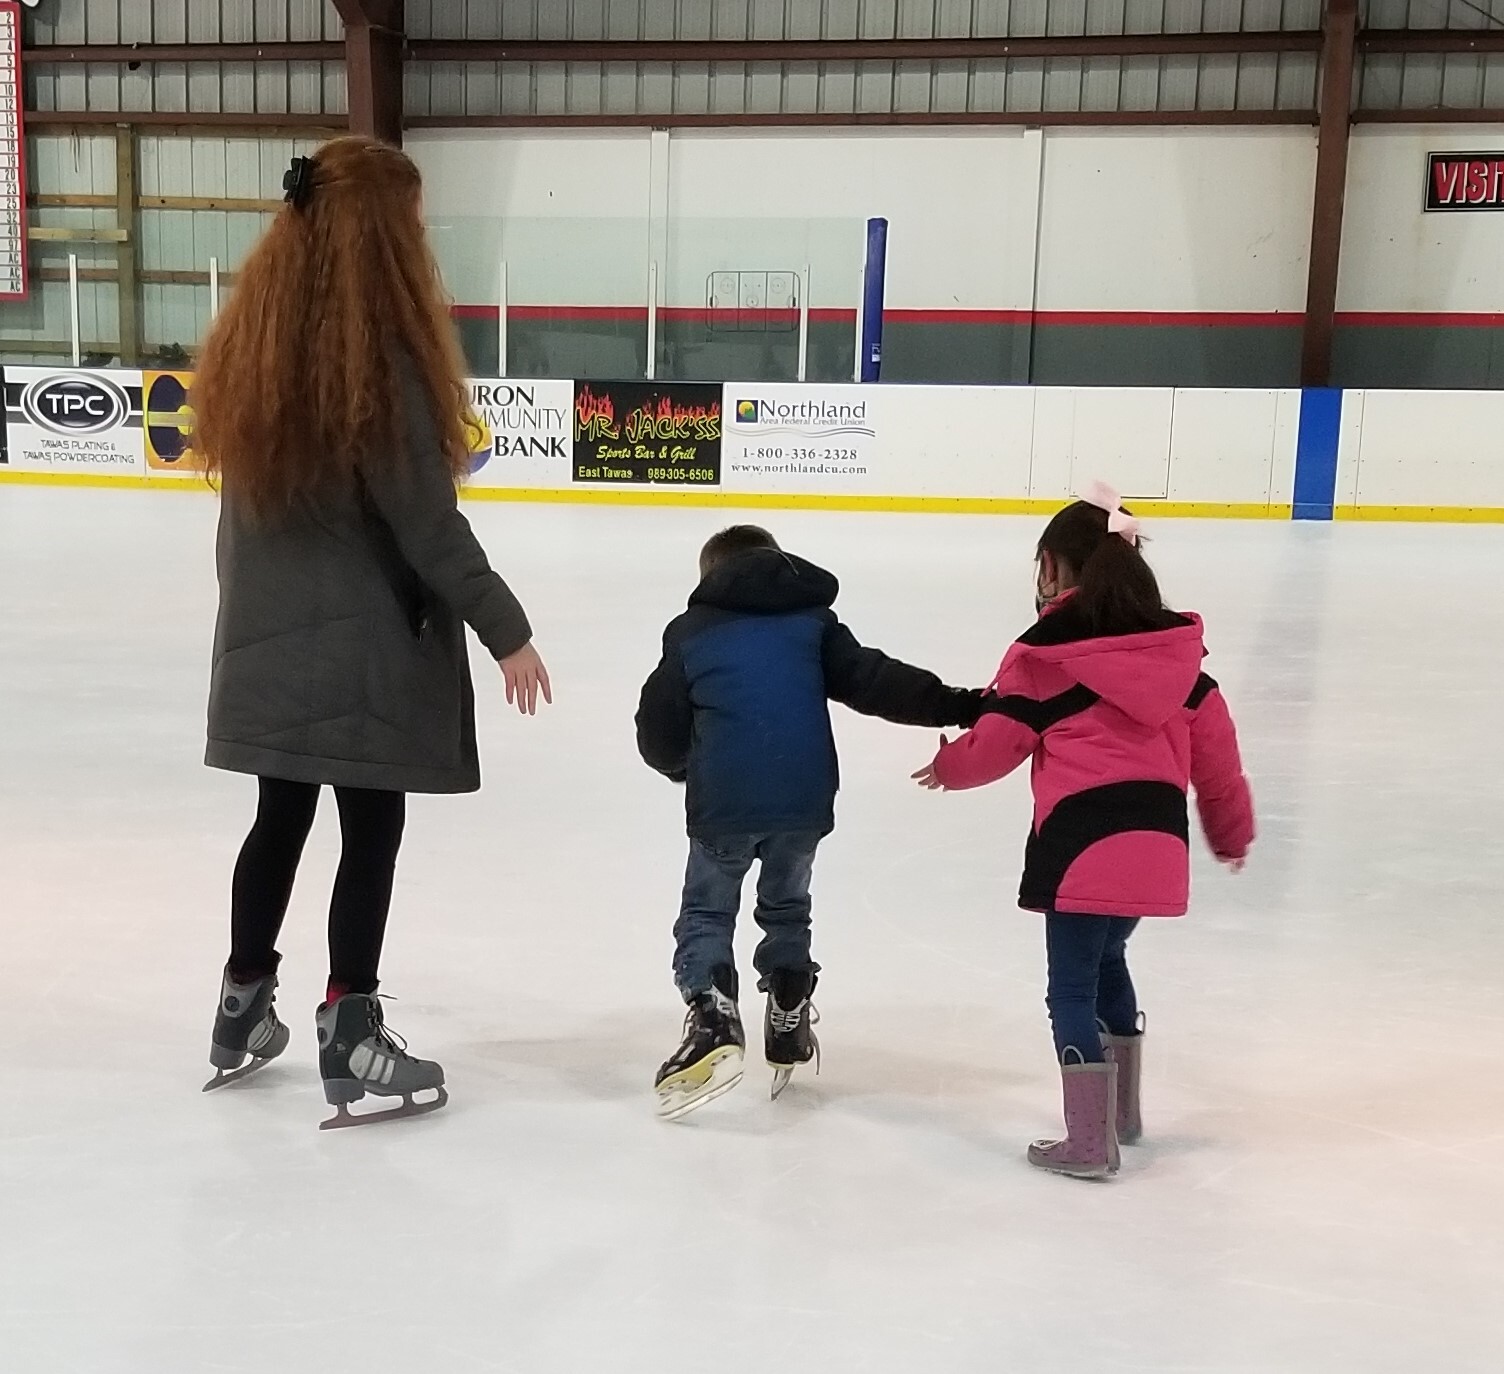 HS student teaching children to ice skate.